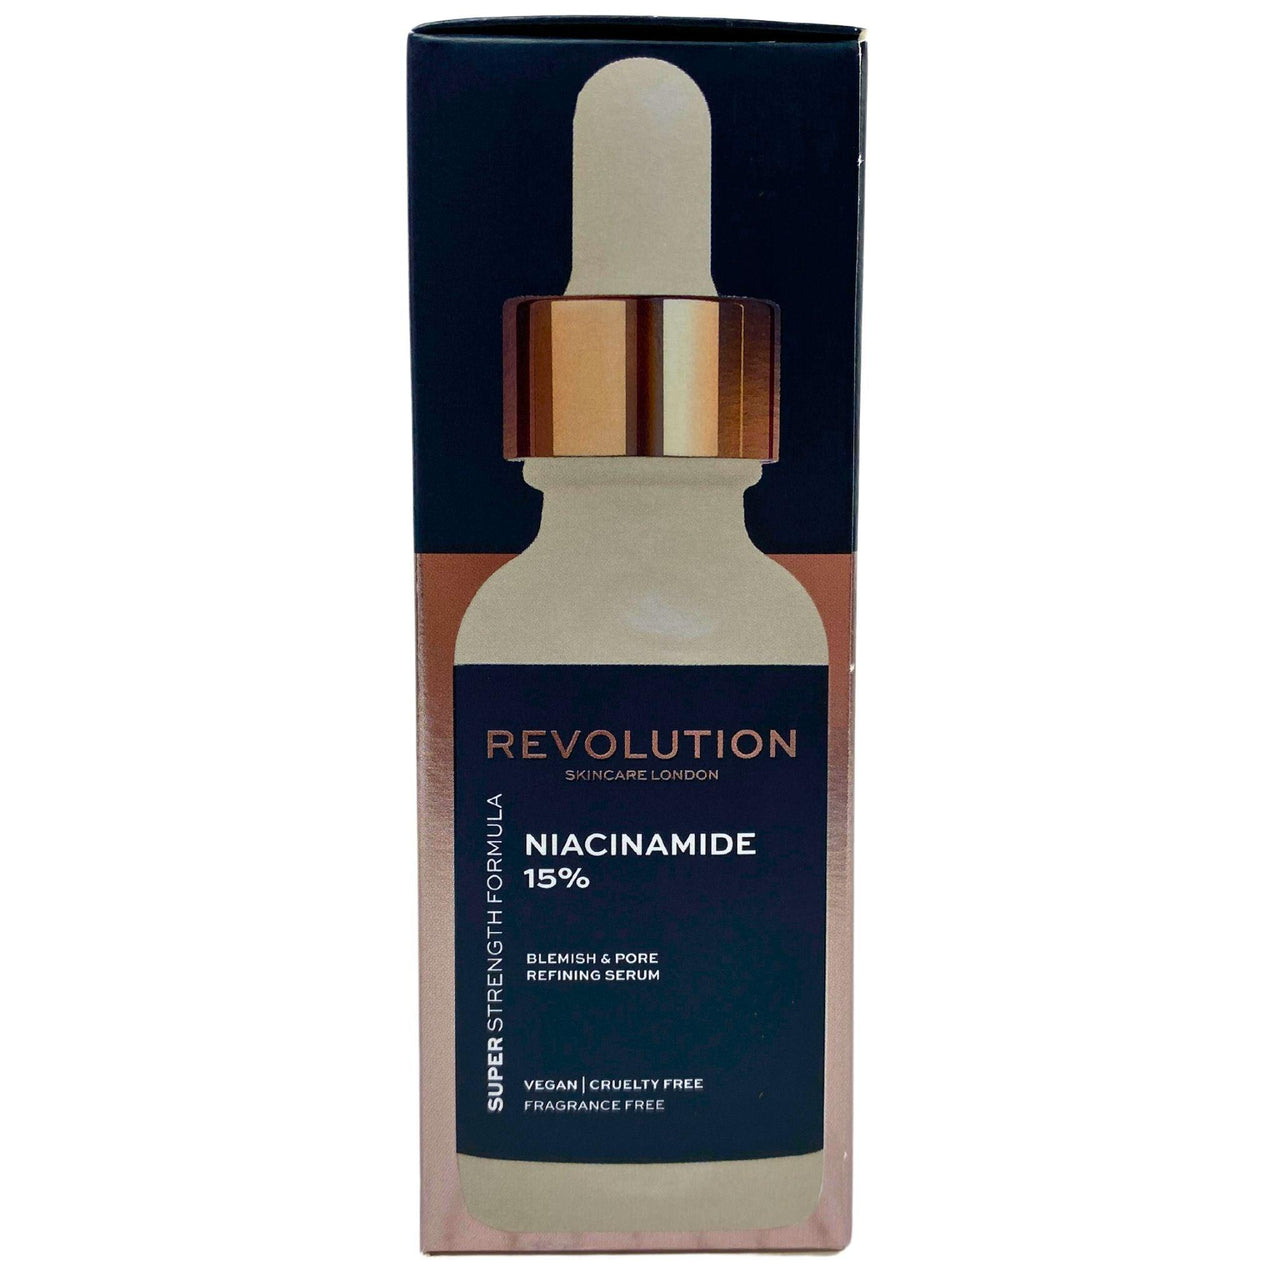 Revolution Skincare London Niacinamide 15% Blemish & Pore Refining Serum 1.01oz (36 Pcs Lot) - Discount Wholesalers Inc